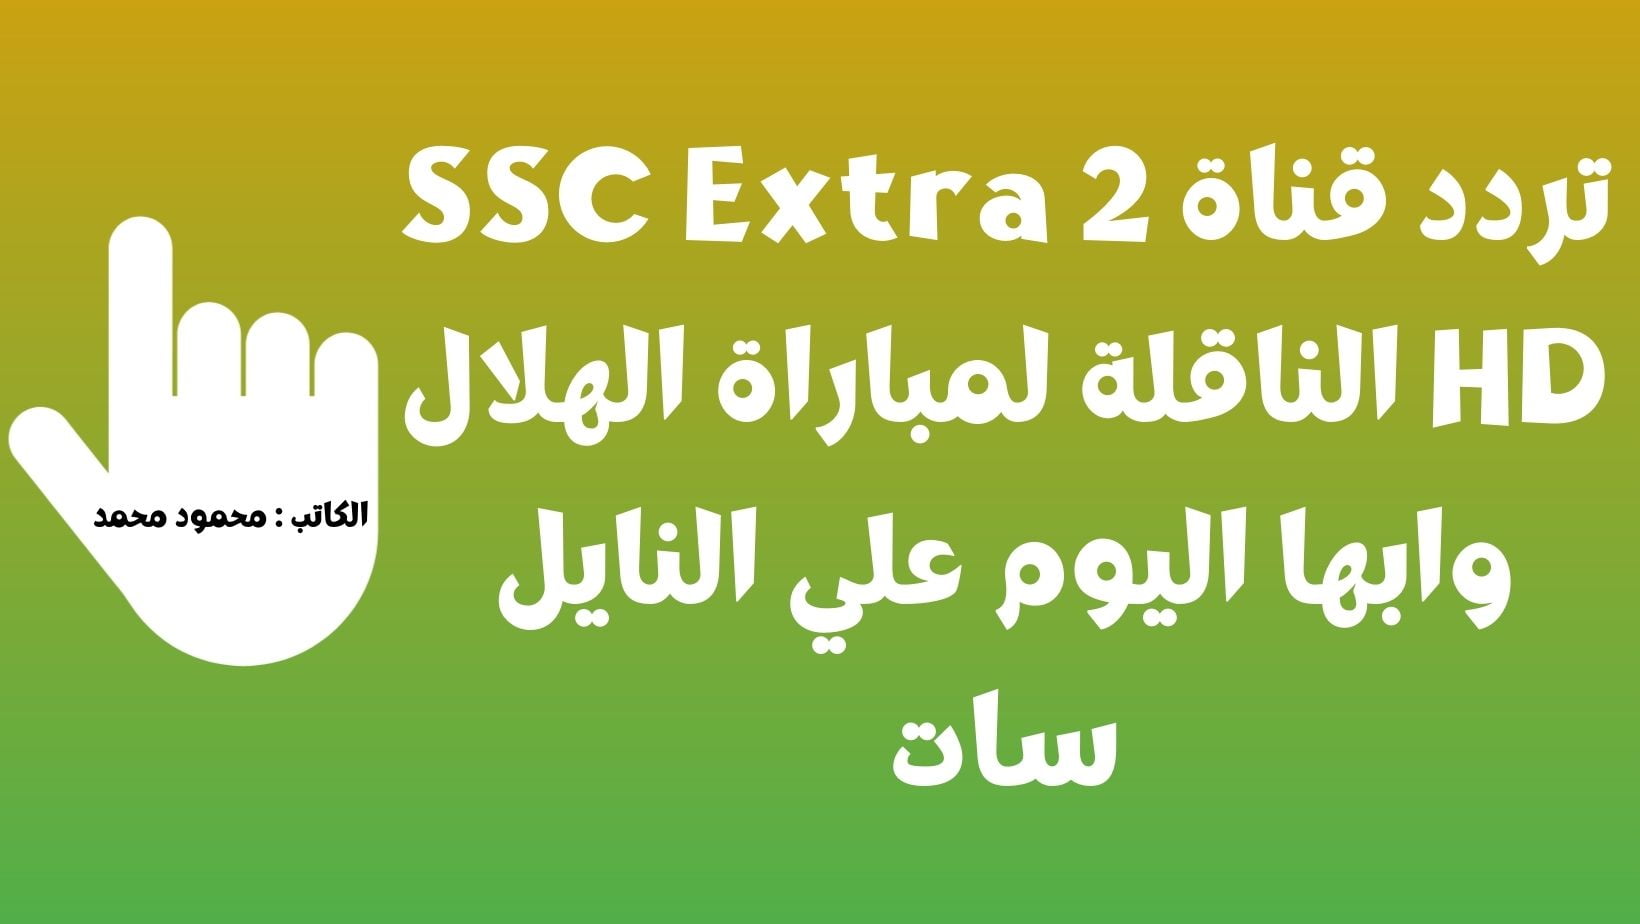 تردد قناة SSC Extra 2 HD